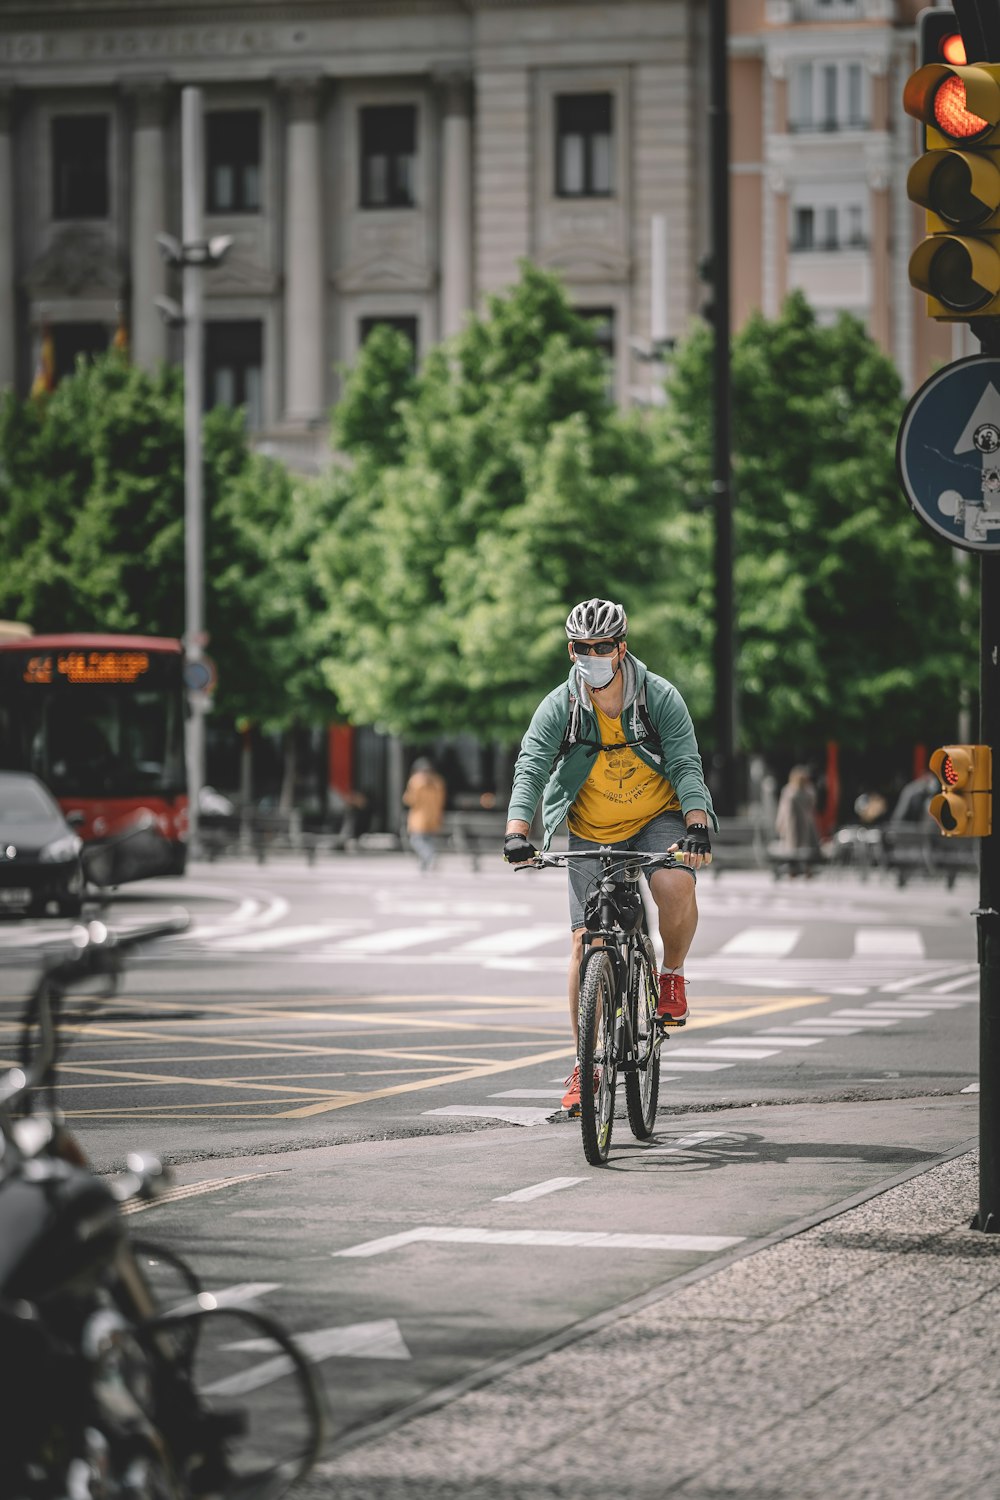 man in green shirt riding bicycle on road during daytime